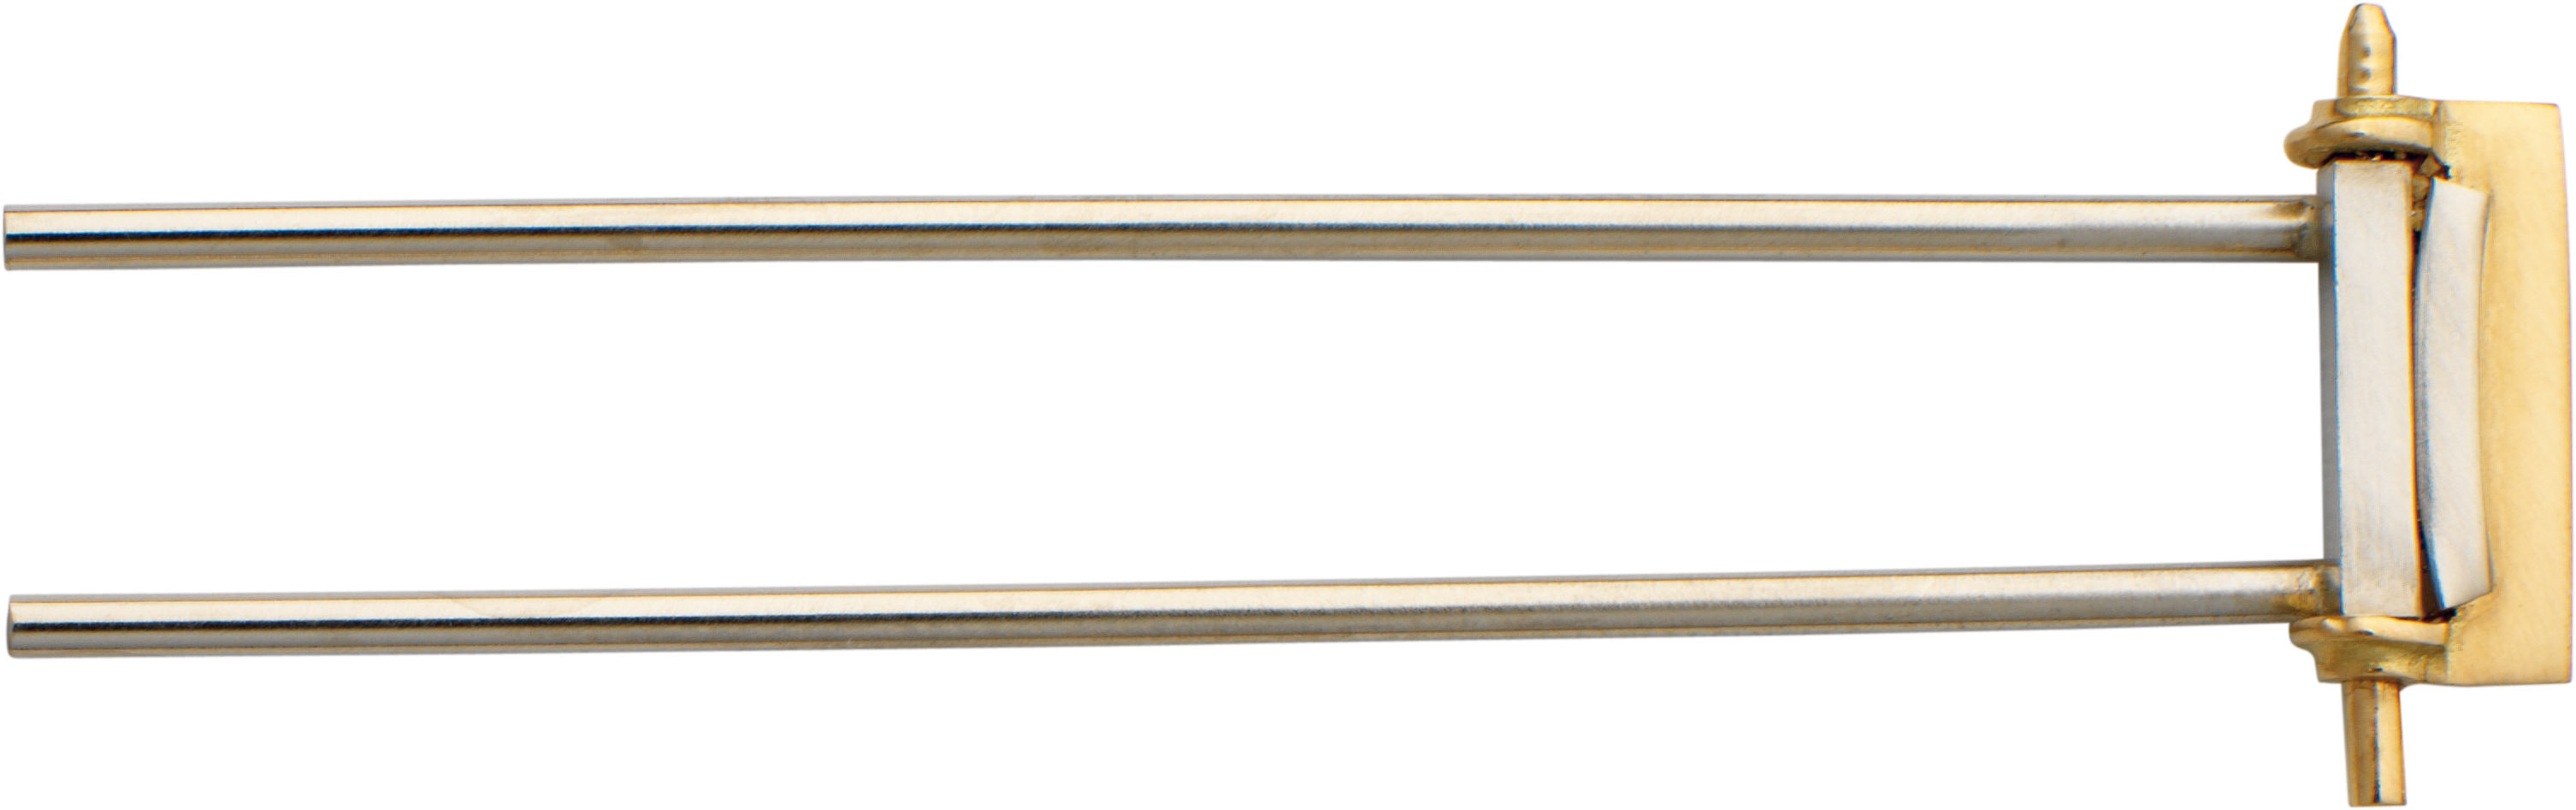 dubbele naald goud 750/-gg/-wg bicolor, l 40,00 x b 10,00mm